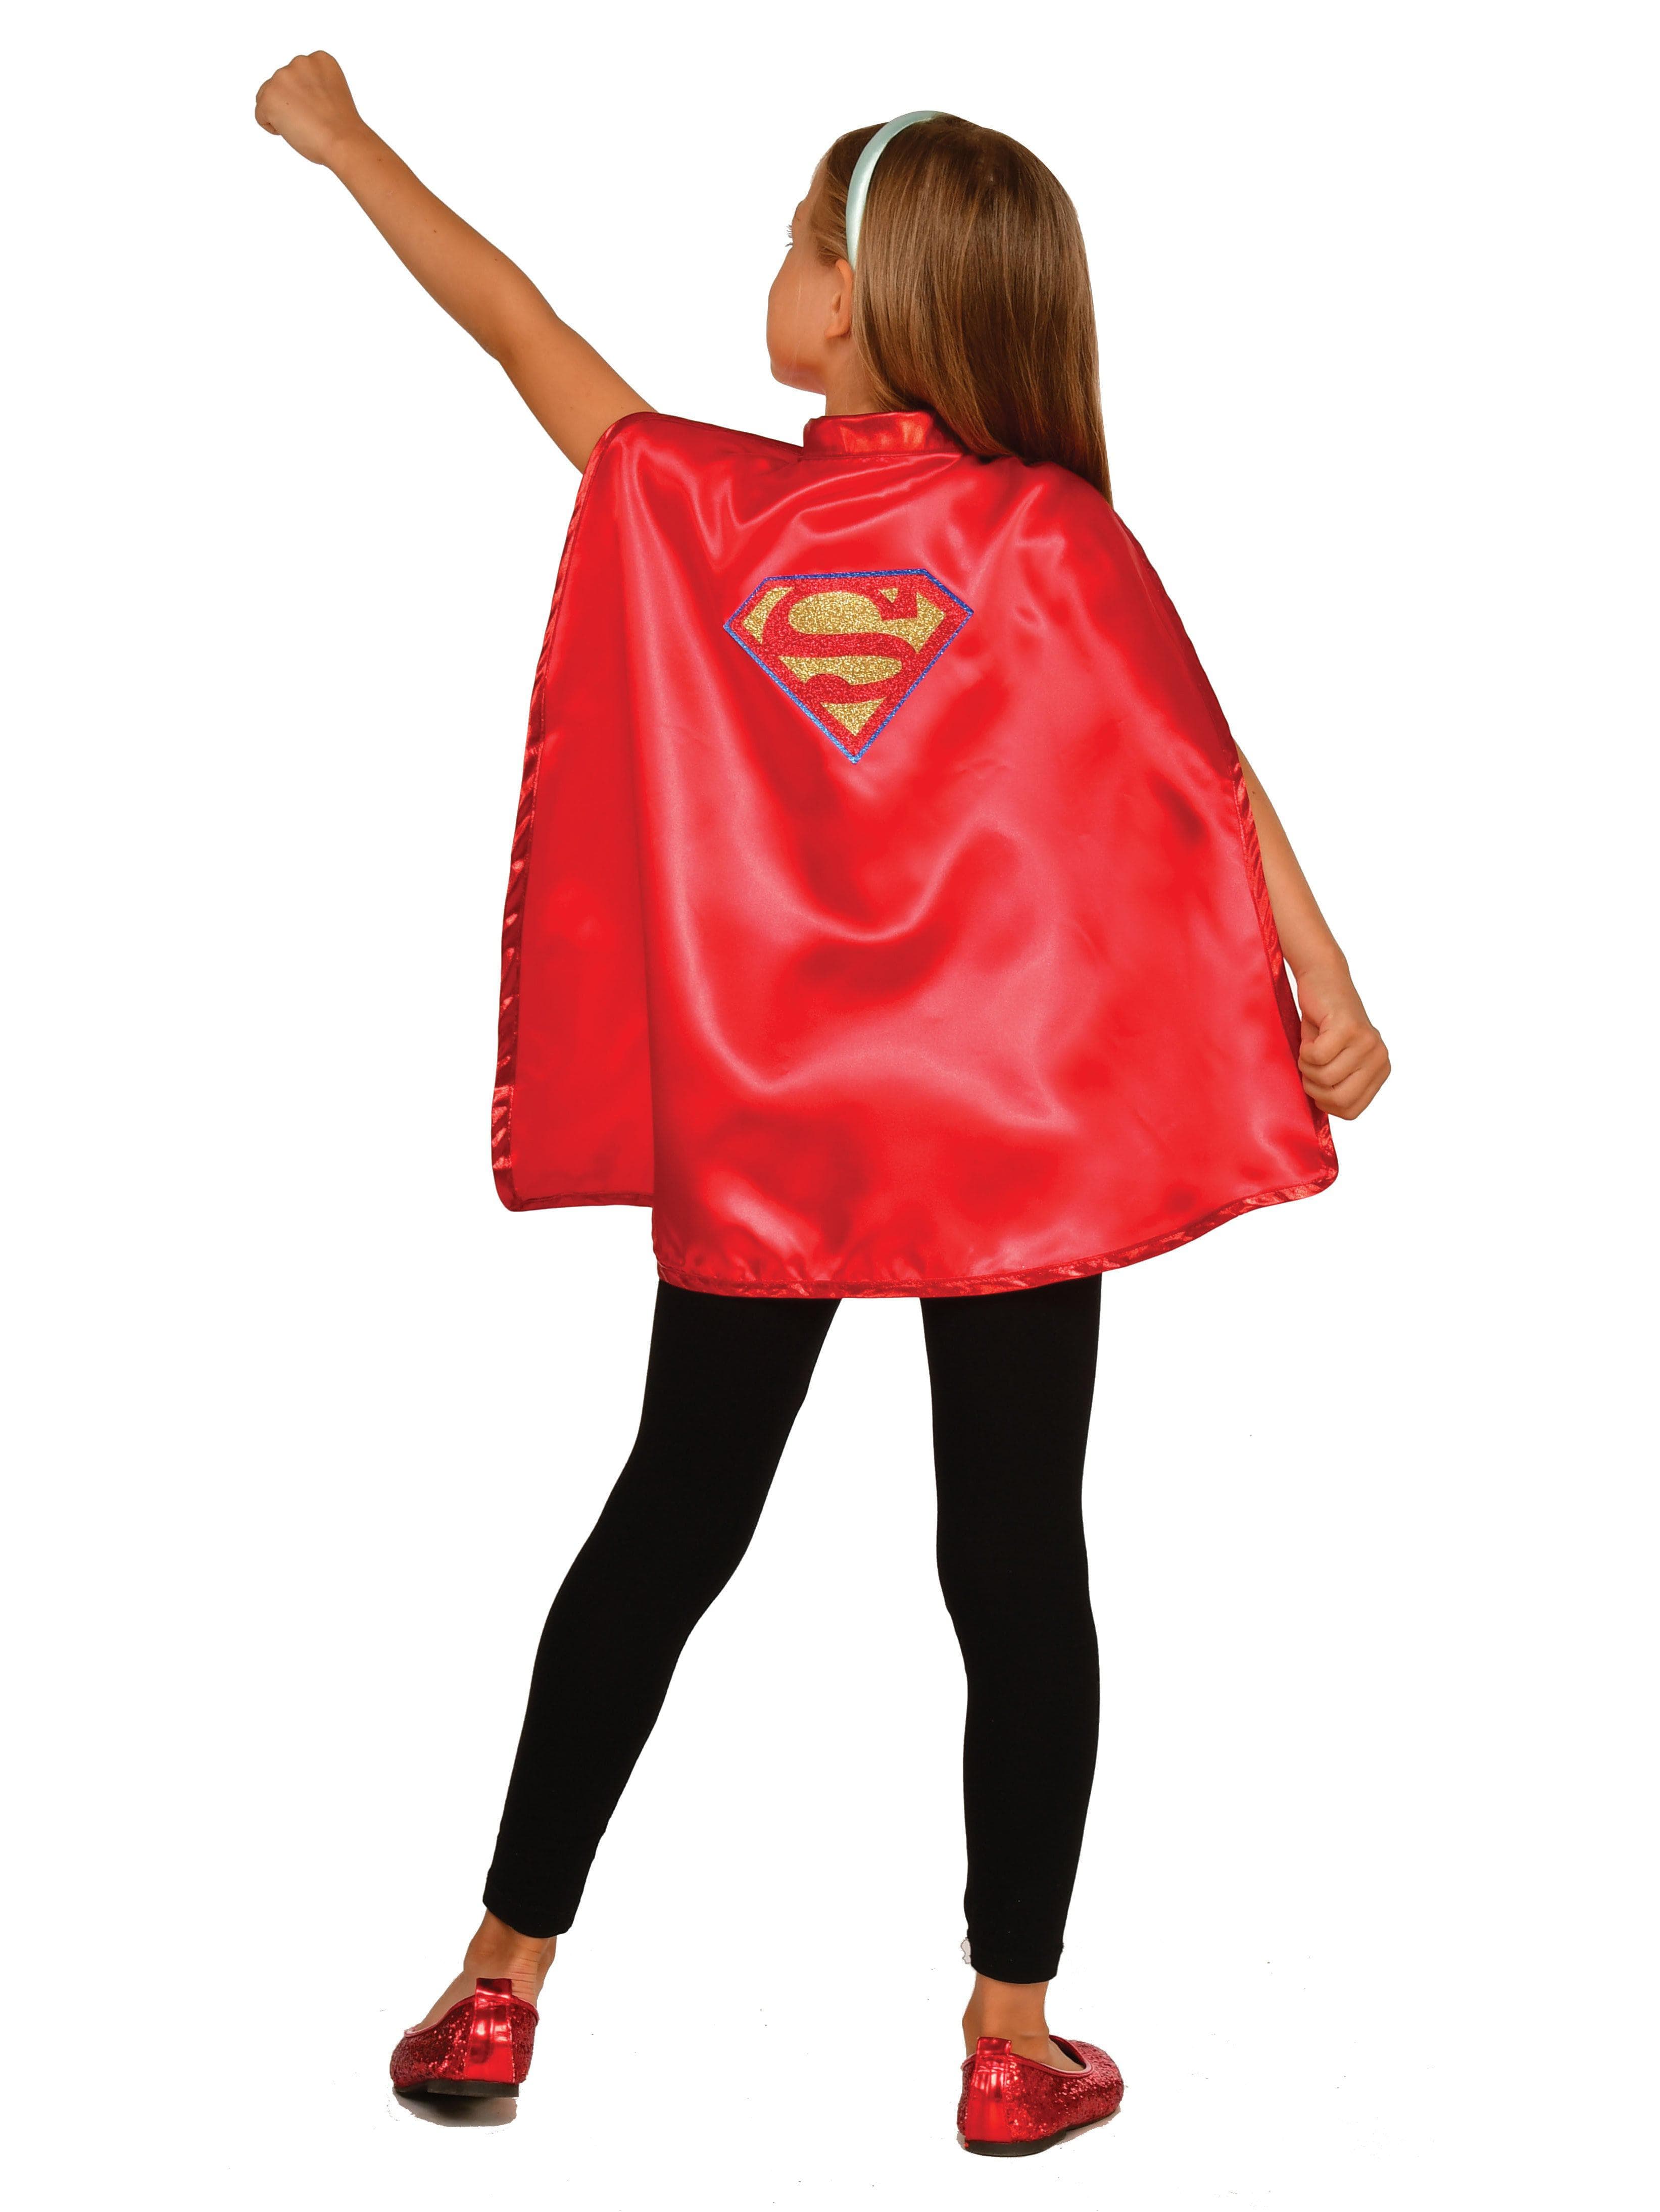 Girls' DC Superhero Girls Supergirl Cape - costumes.com